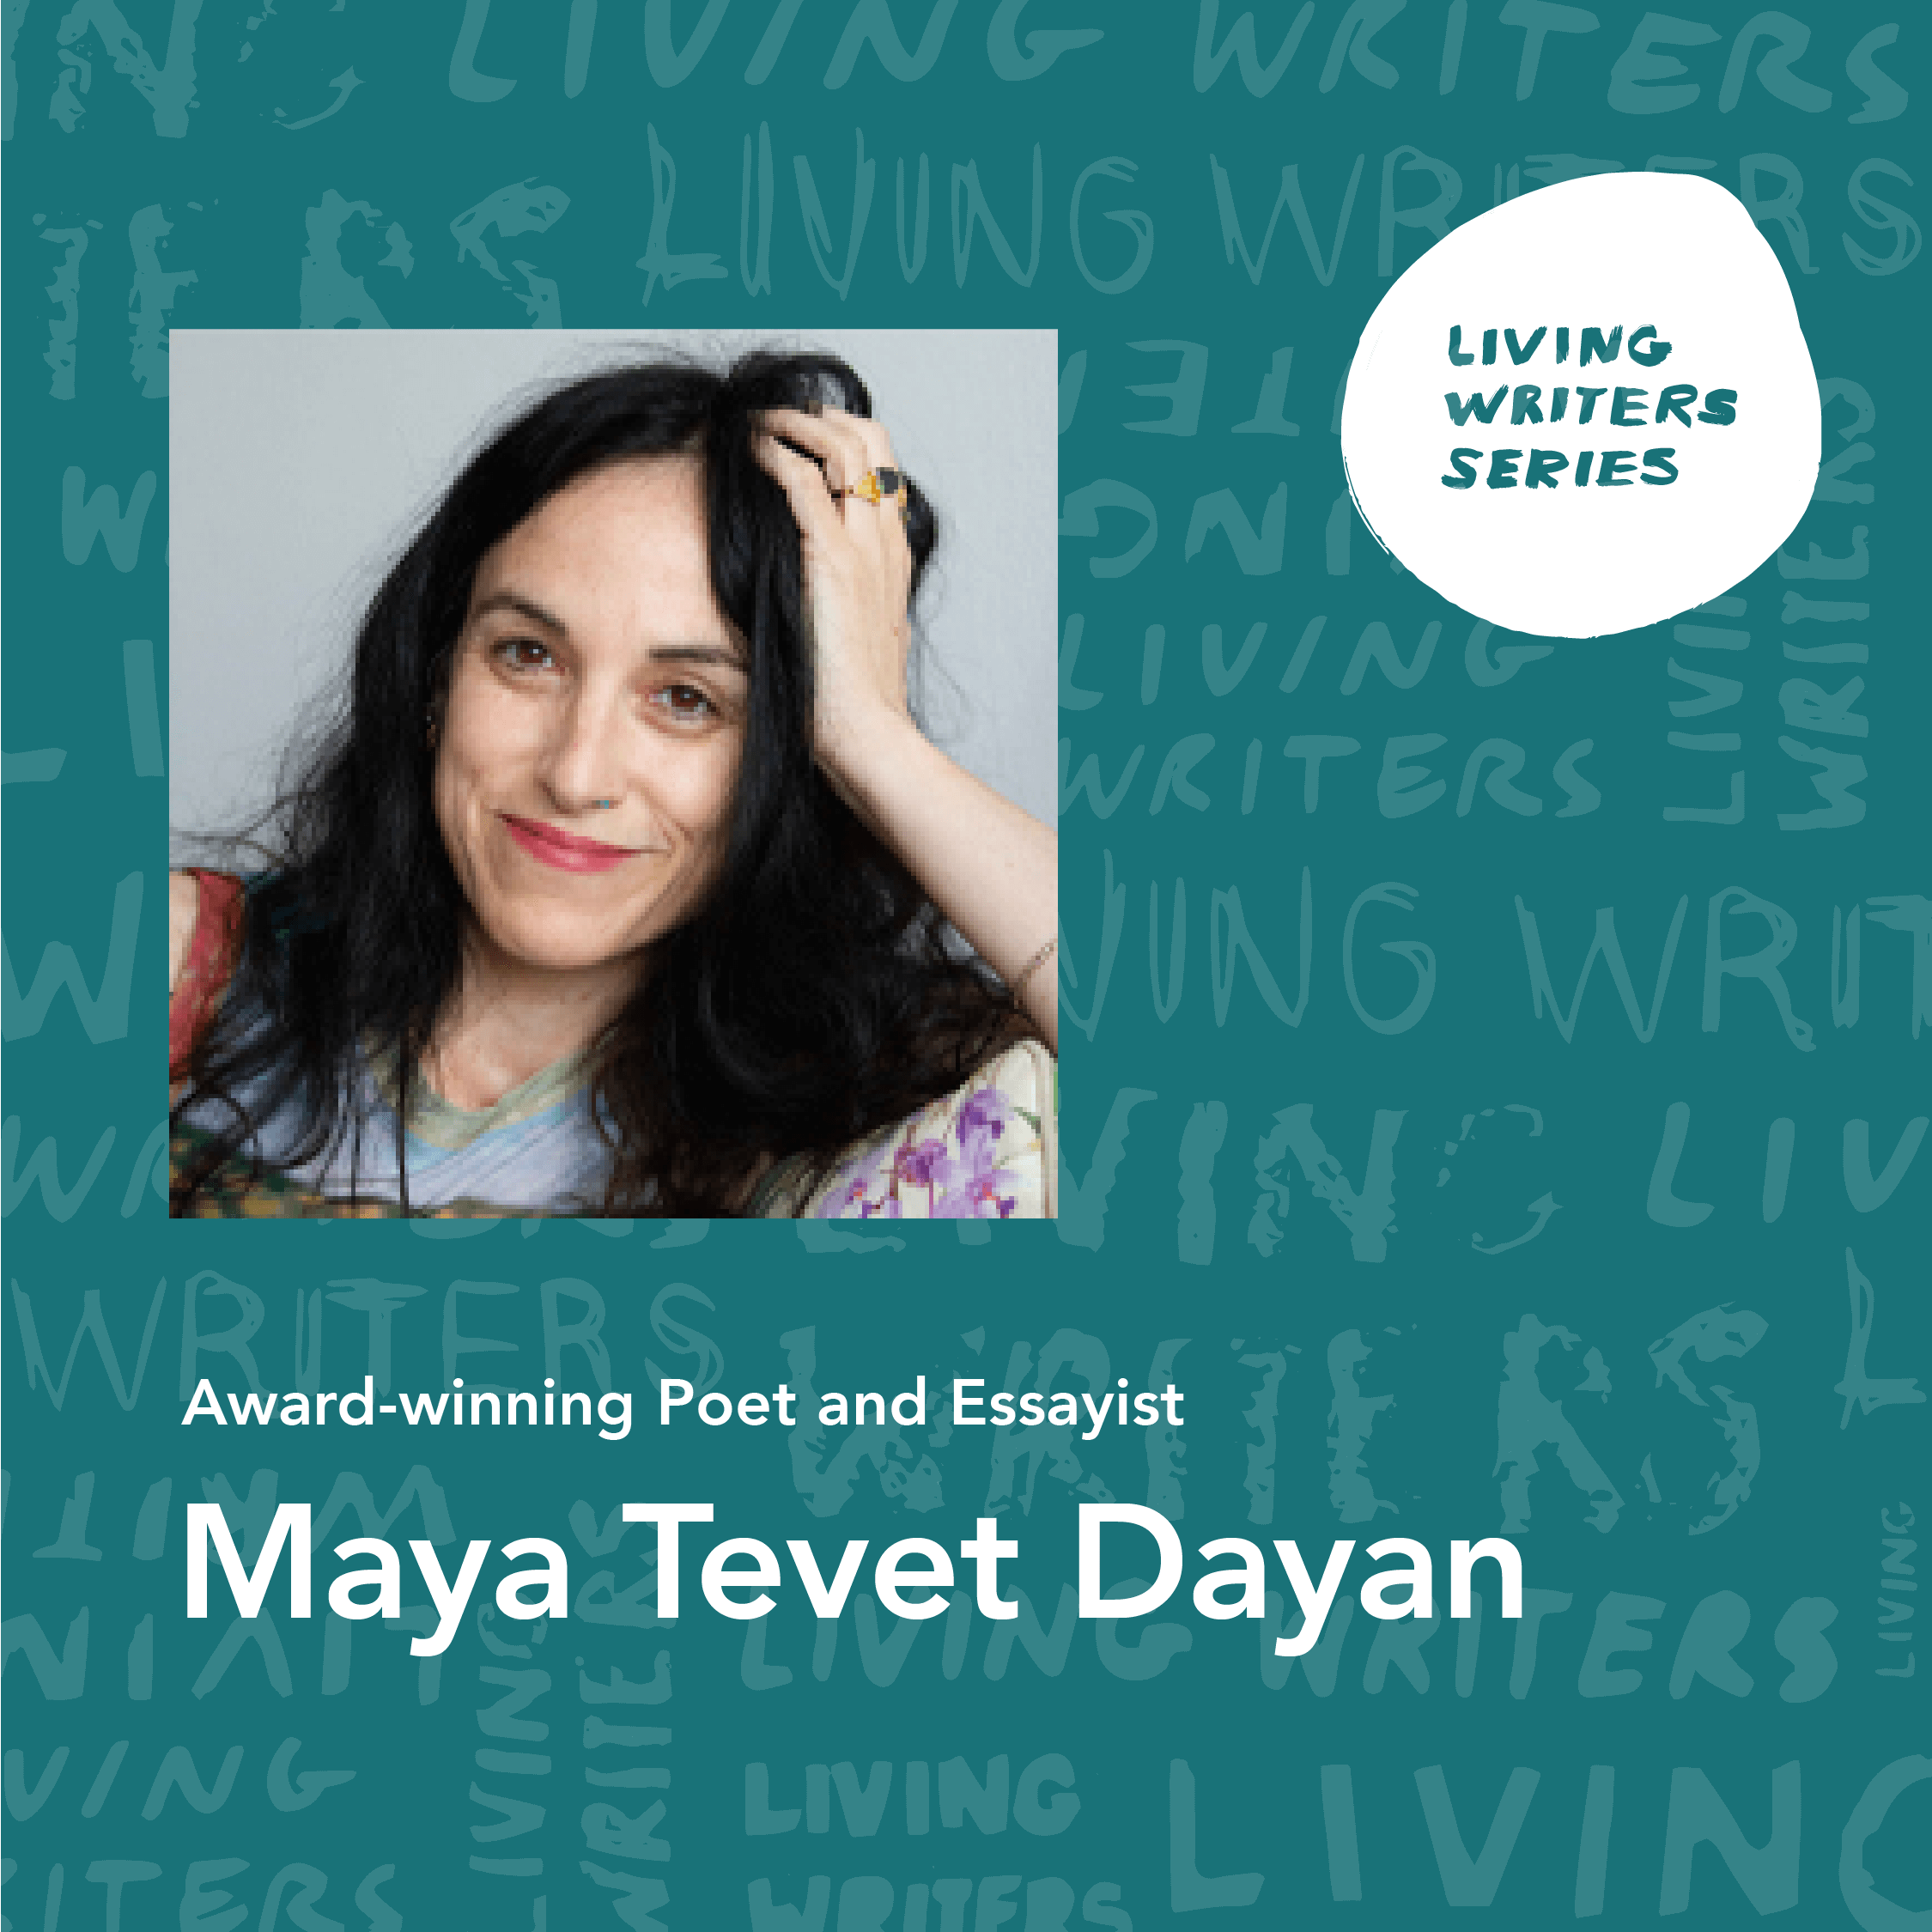 Maya Tevet Dayan